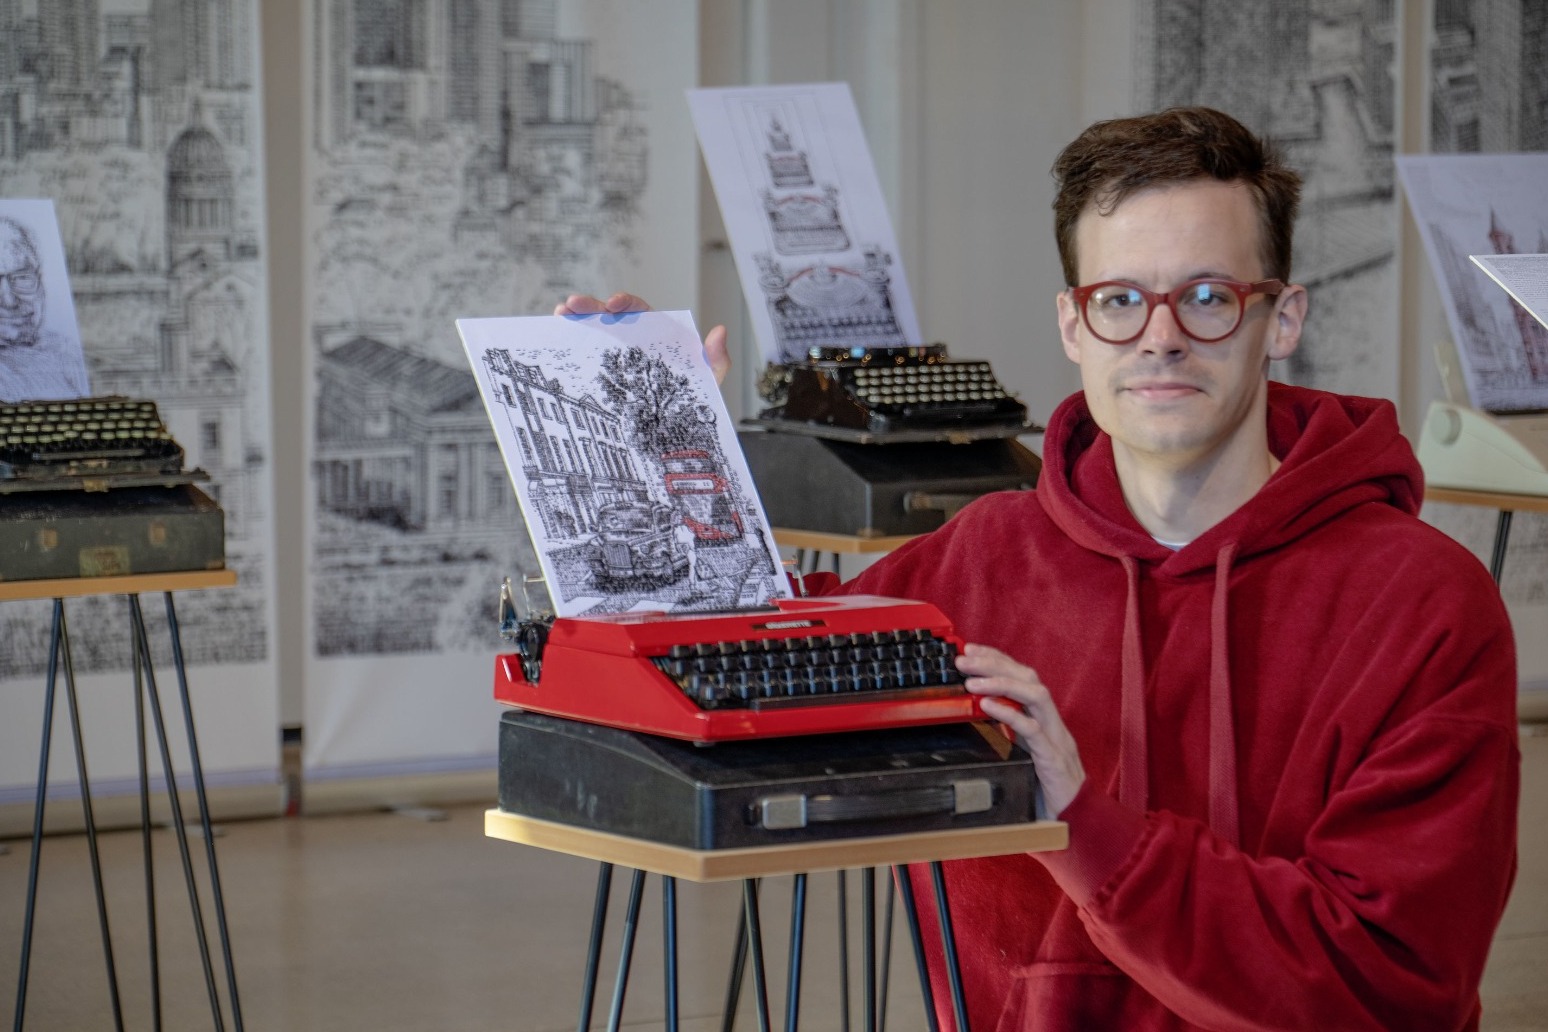 Typewriter artist ‘blown away’ after Tom Hanks signs artwork 